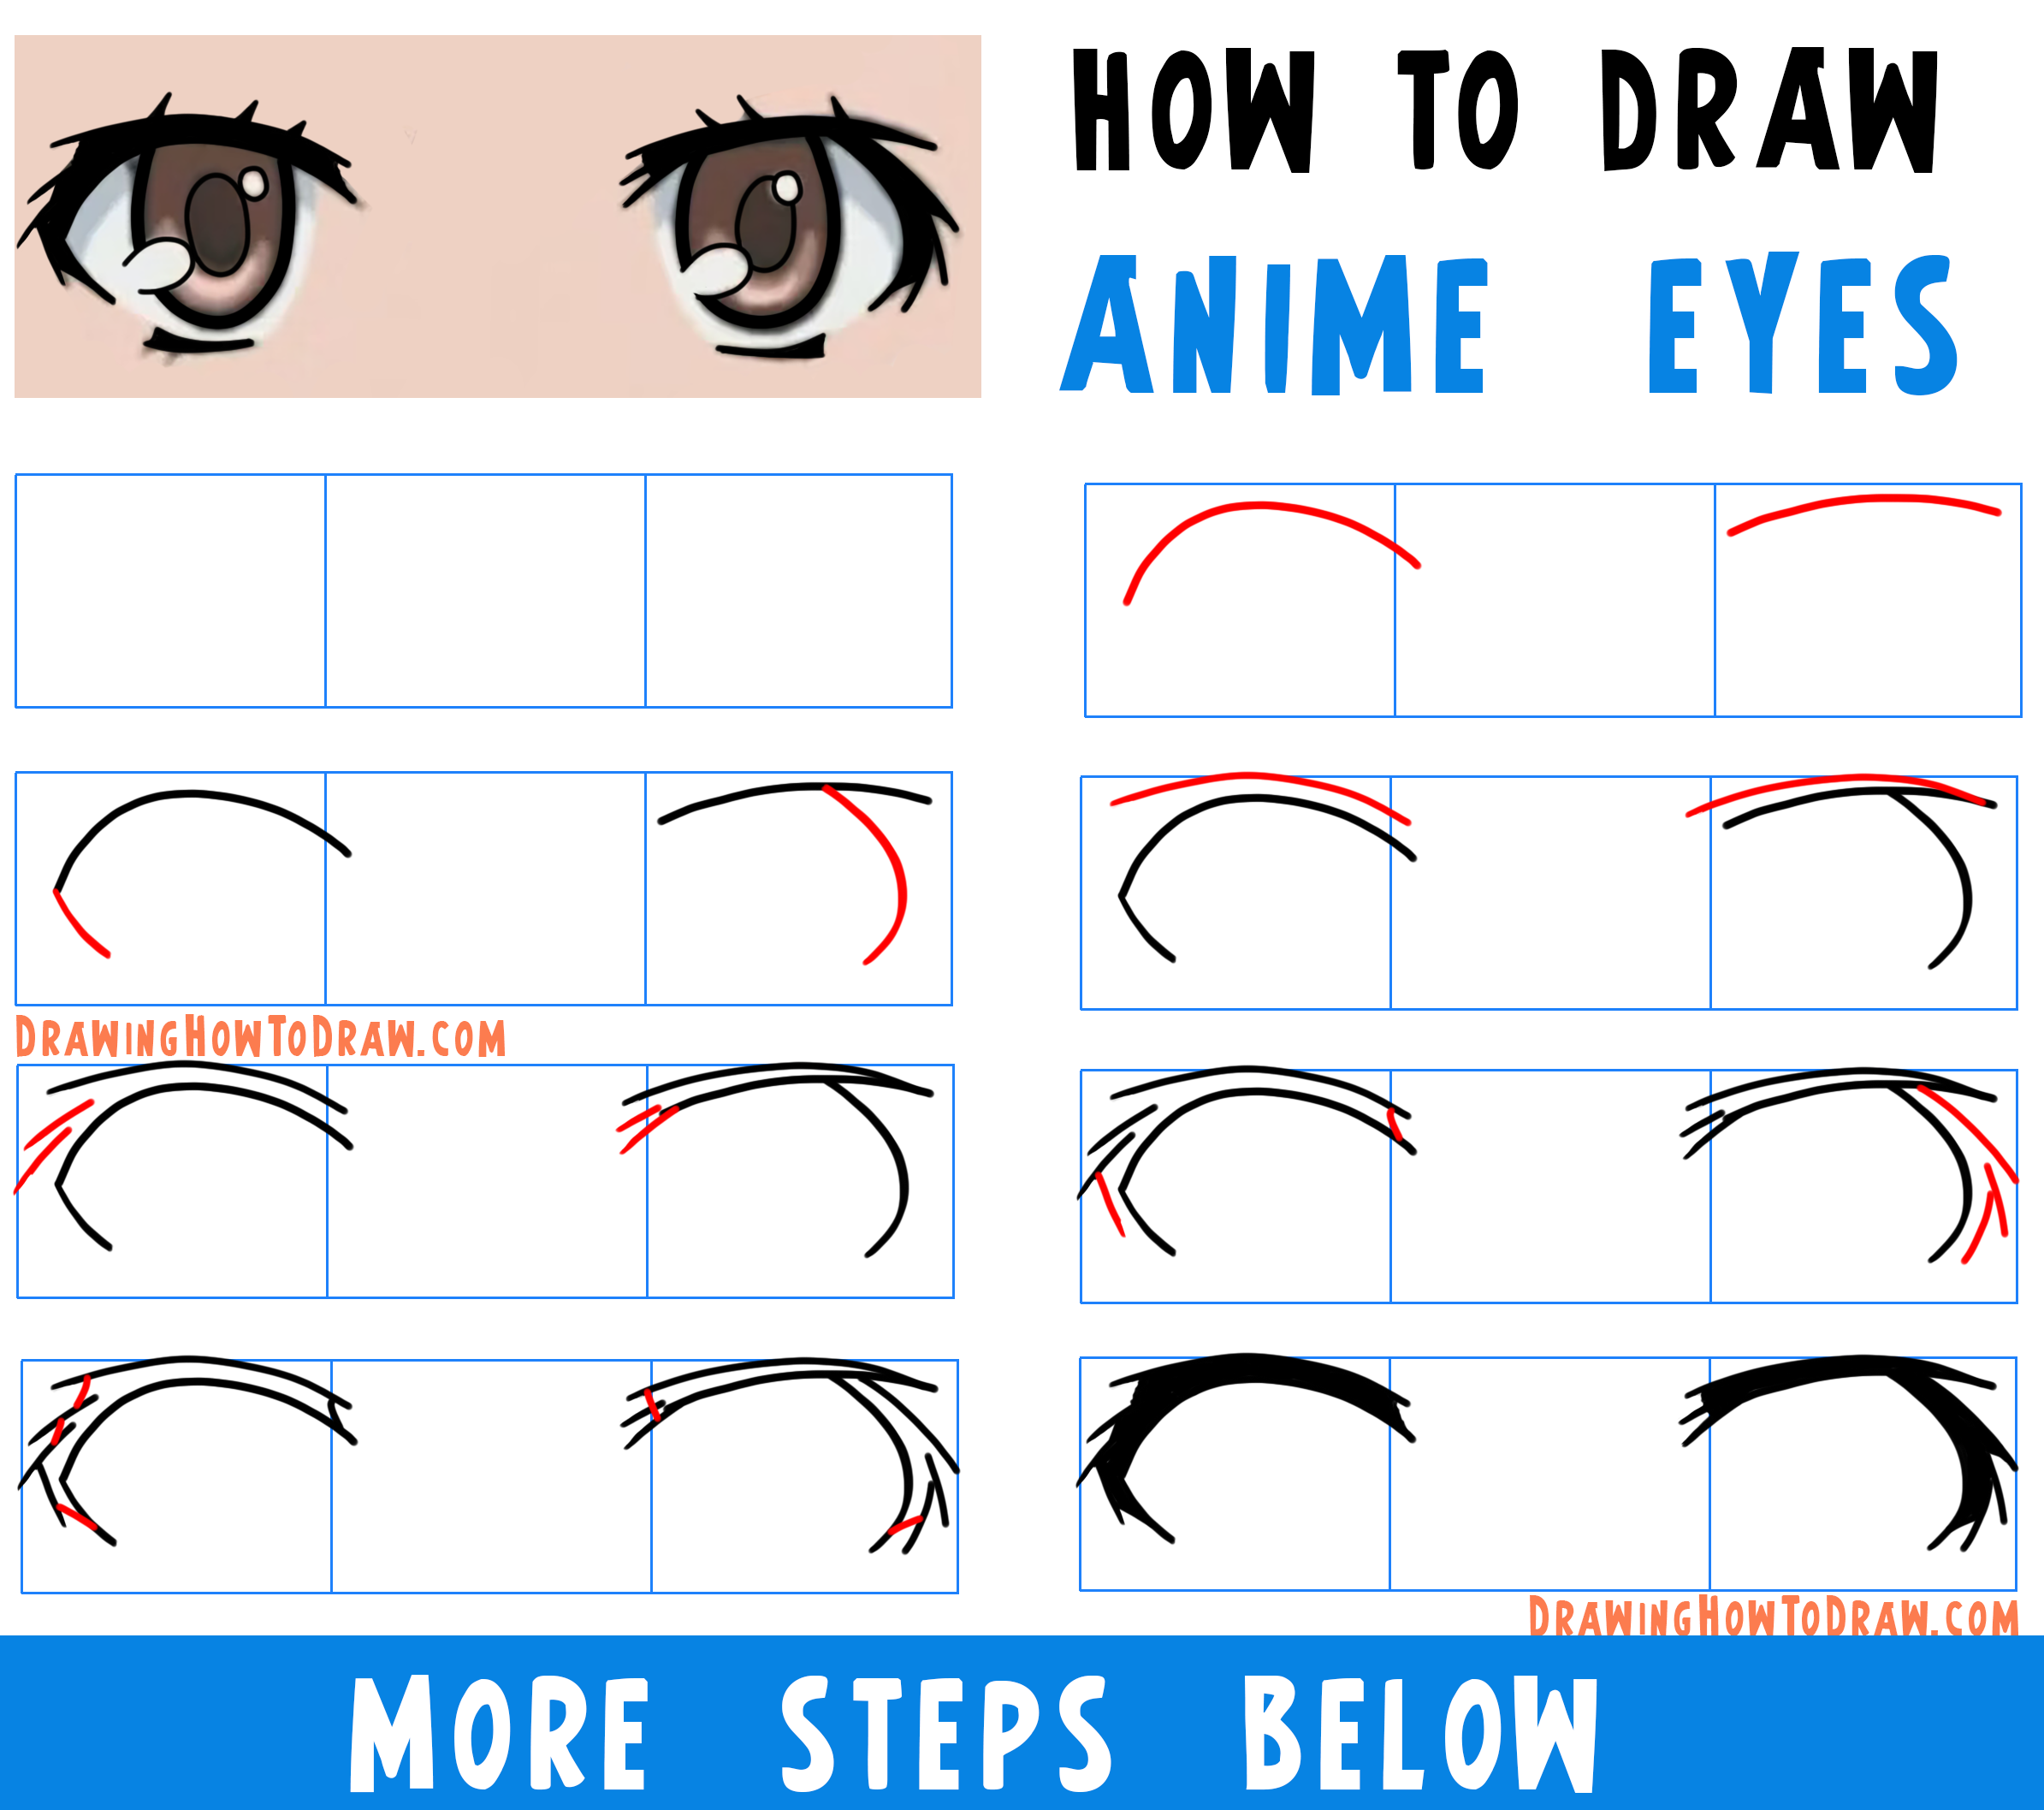 3200 Anime eyes Vector Images  Depositphotos